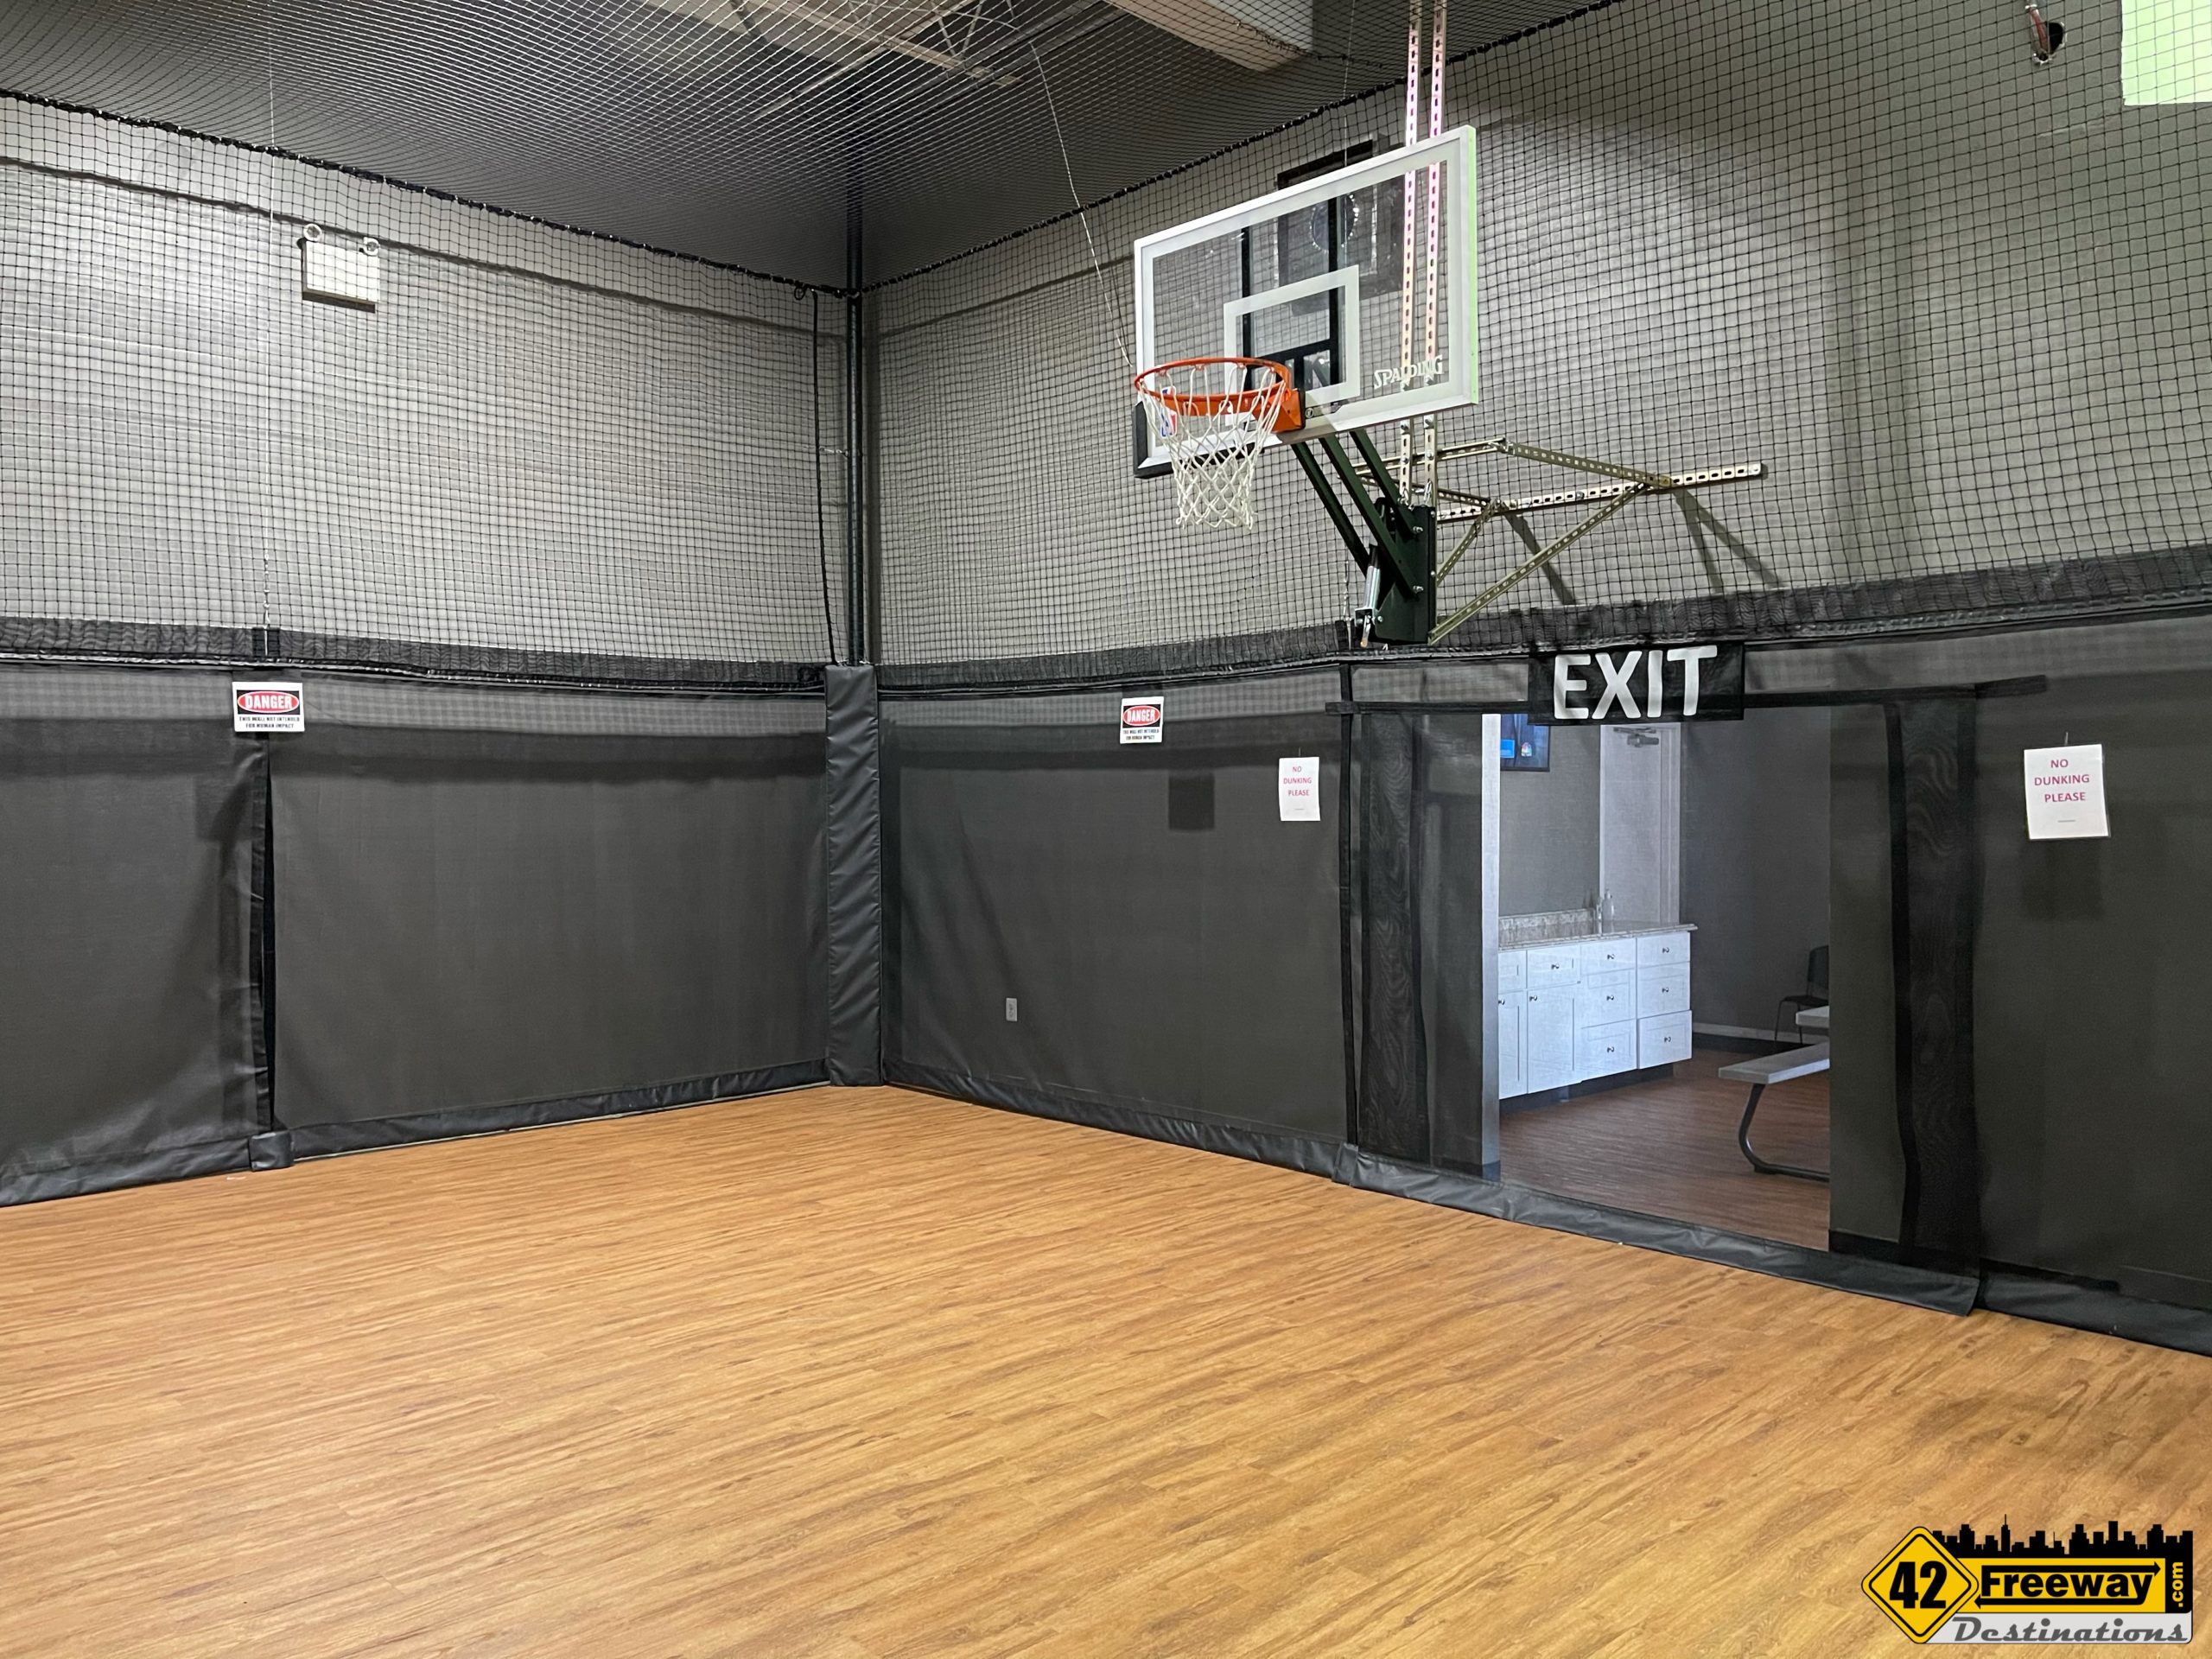 New Jersey Nets — Sports Design Agency